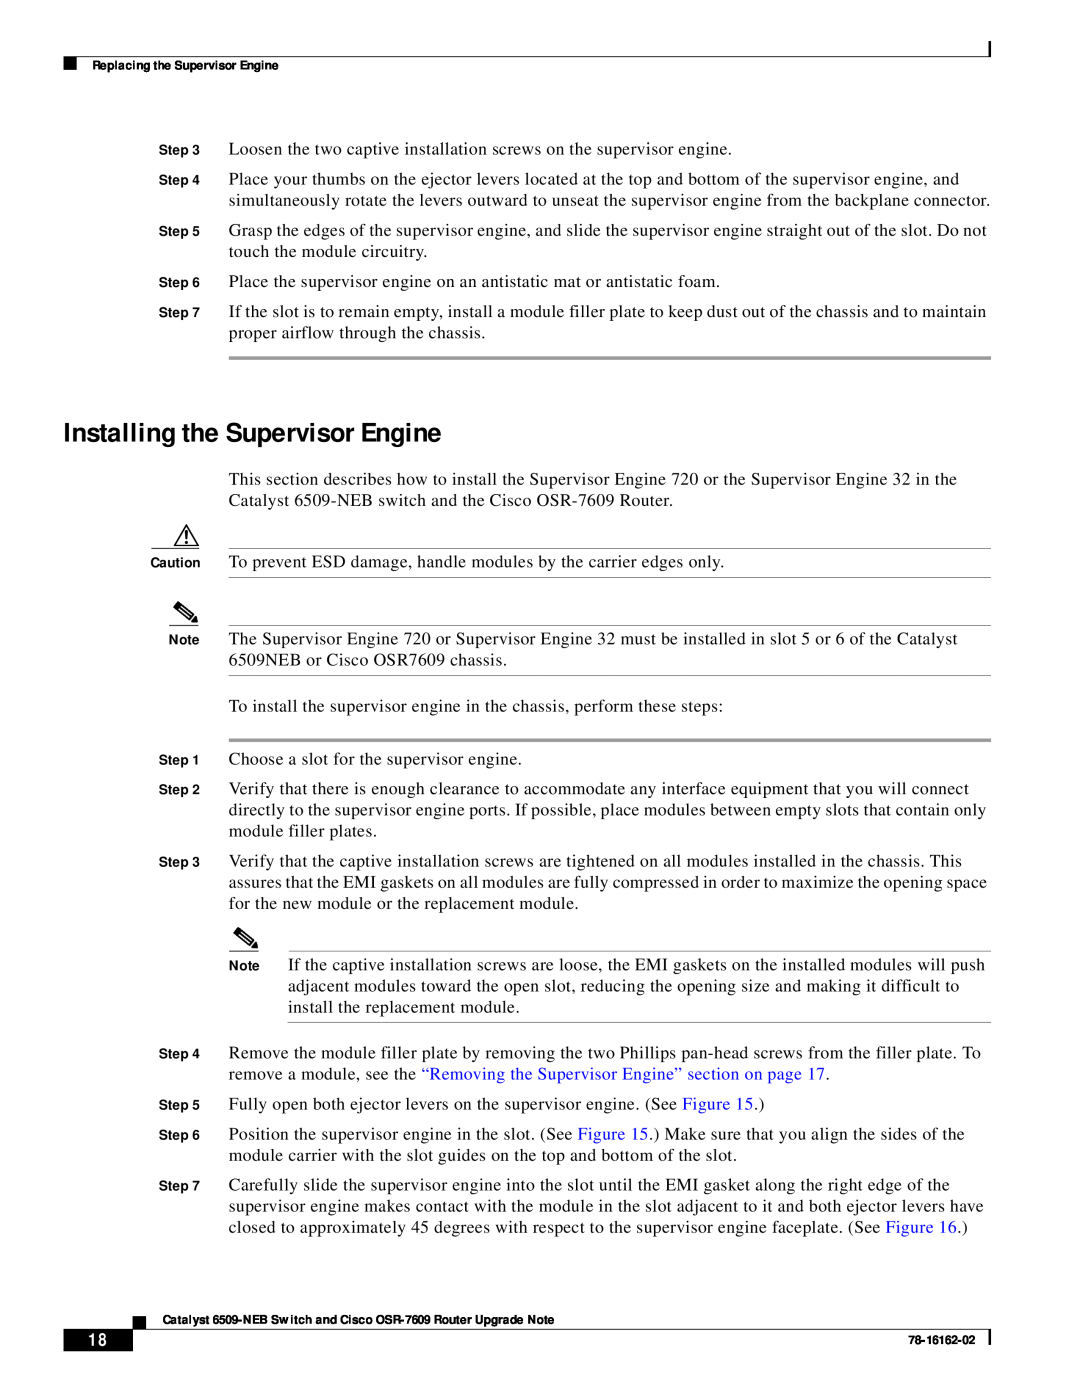 Cisco Systems 6509-NEB, OSR-7609 manual Installing the Supervisor Engine 